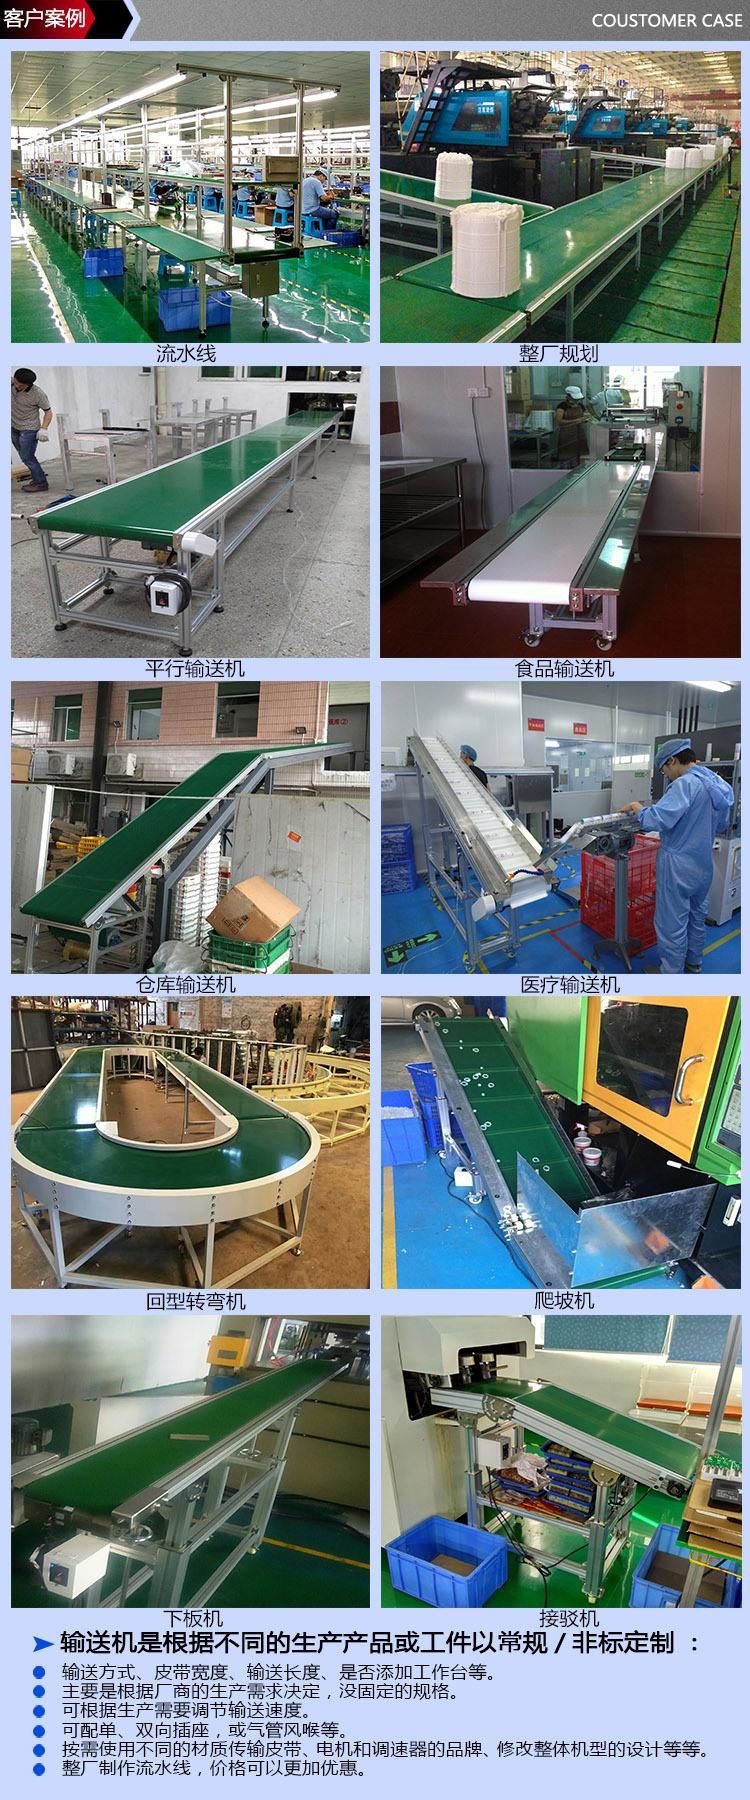 PVC Belt Conveyor Manufacturer High Efficiency Turning Conveyor Belt System